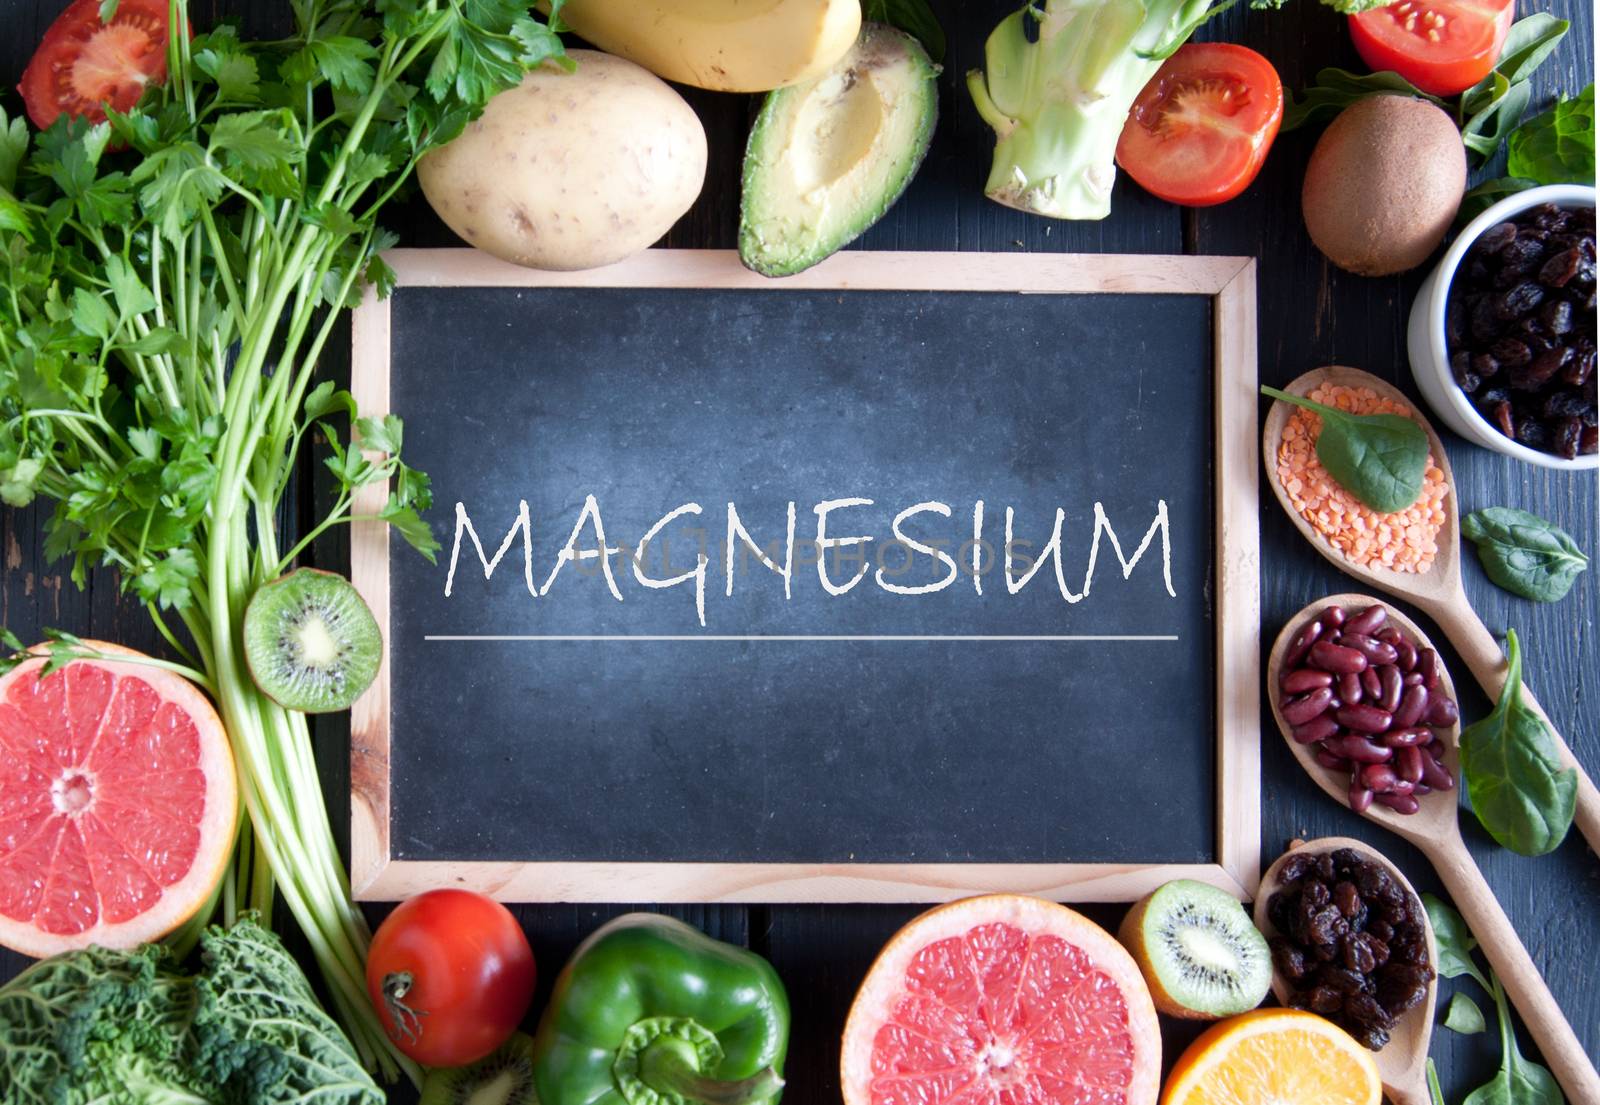 Magnesium diet by unikpix